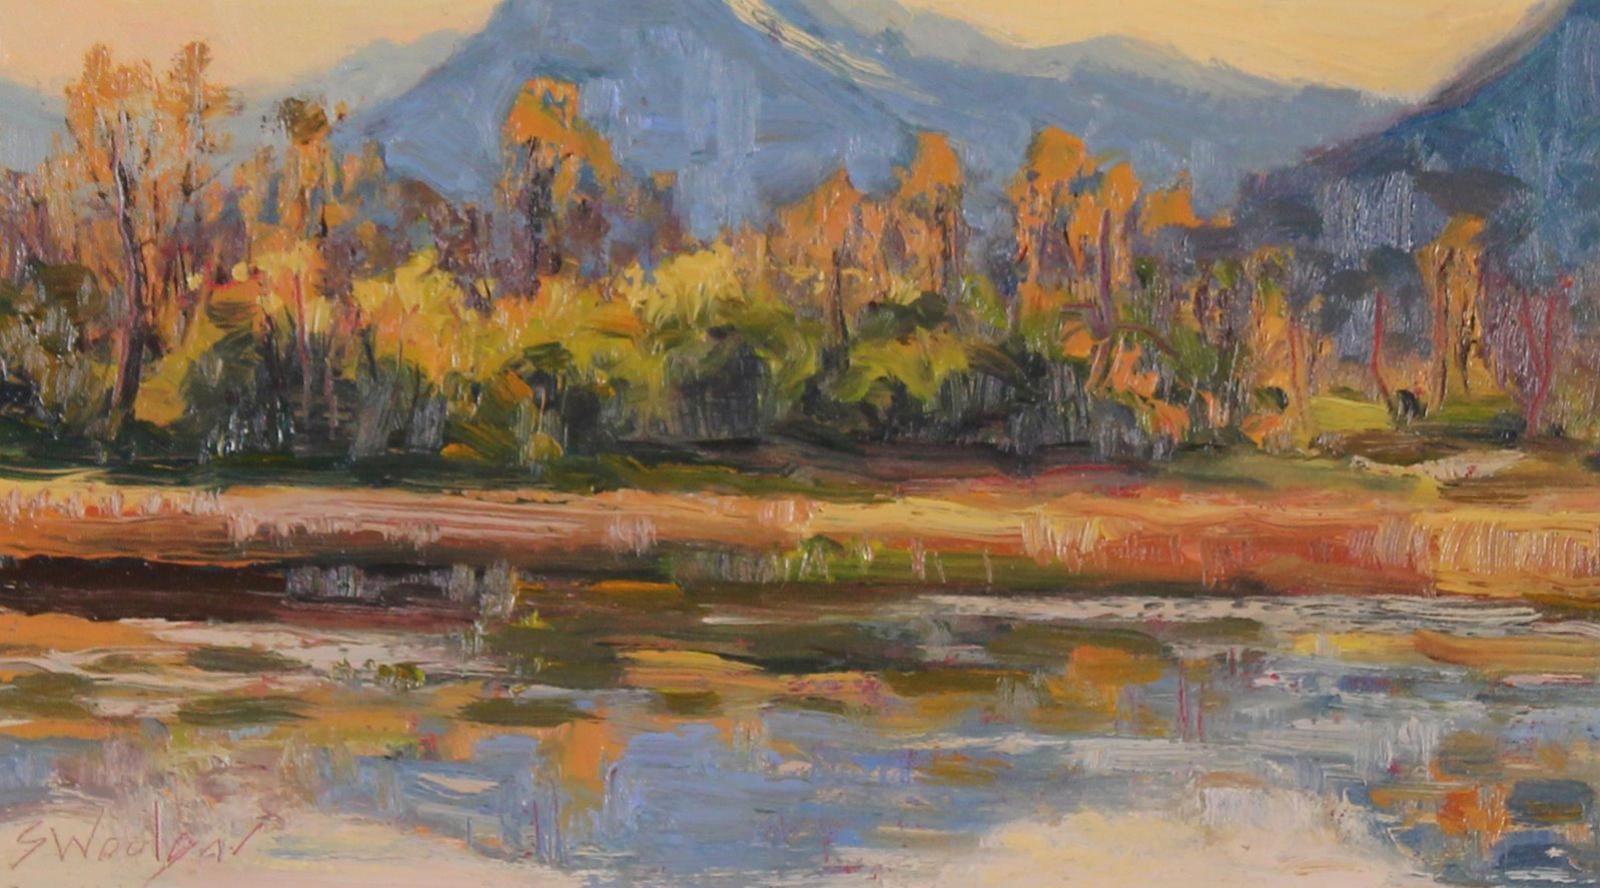 Susan Woolgar (1955) - Mountain River, Autumn